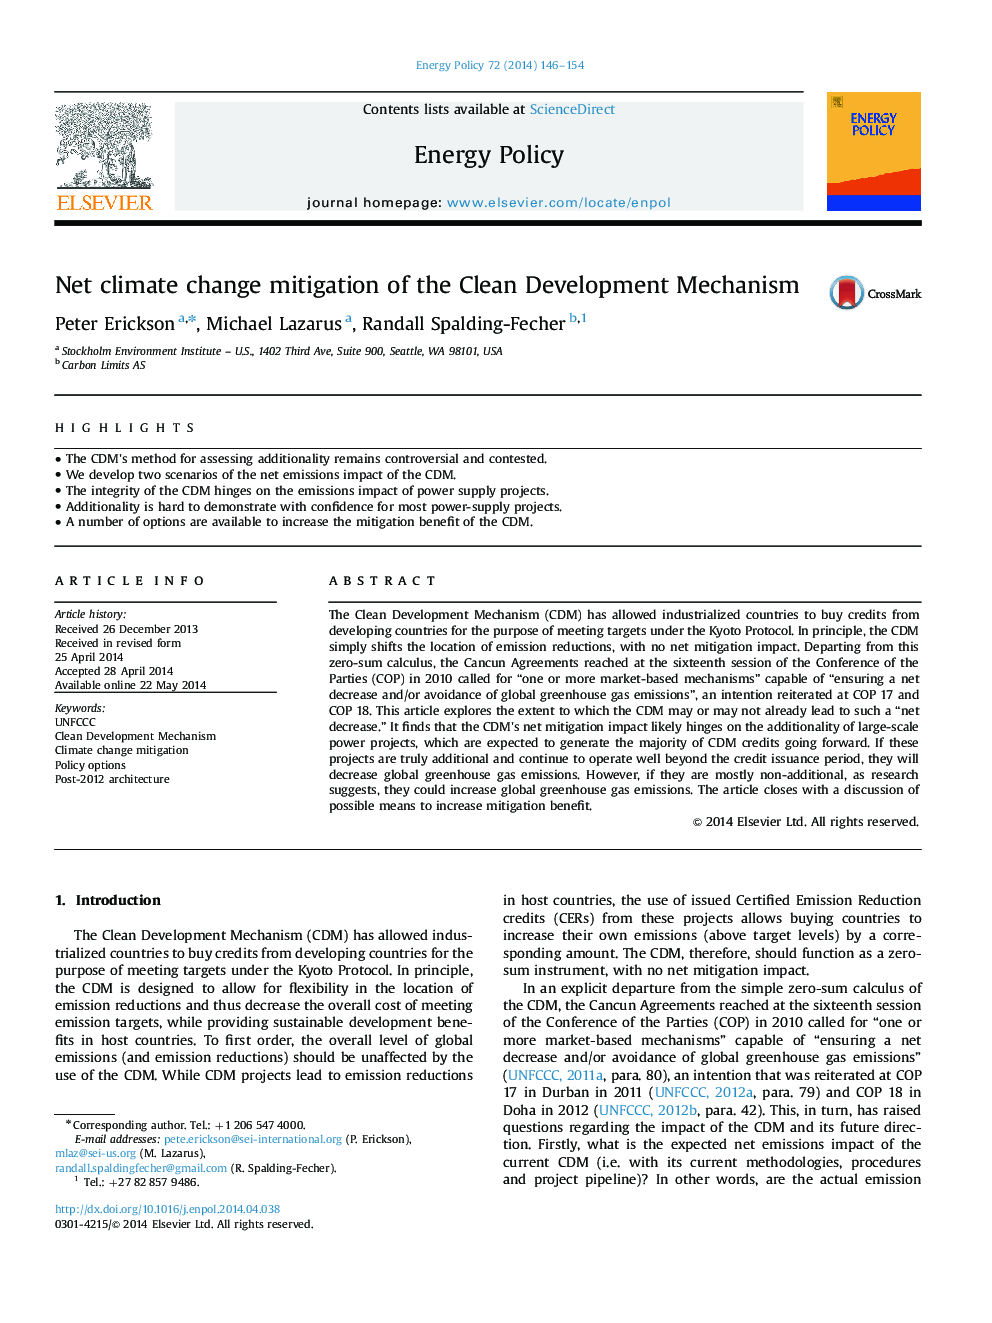 Net climate change mitigation of the Clean Development Mechanism